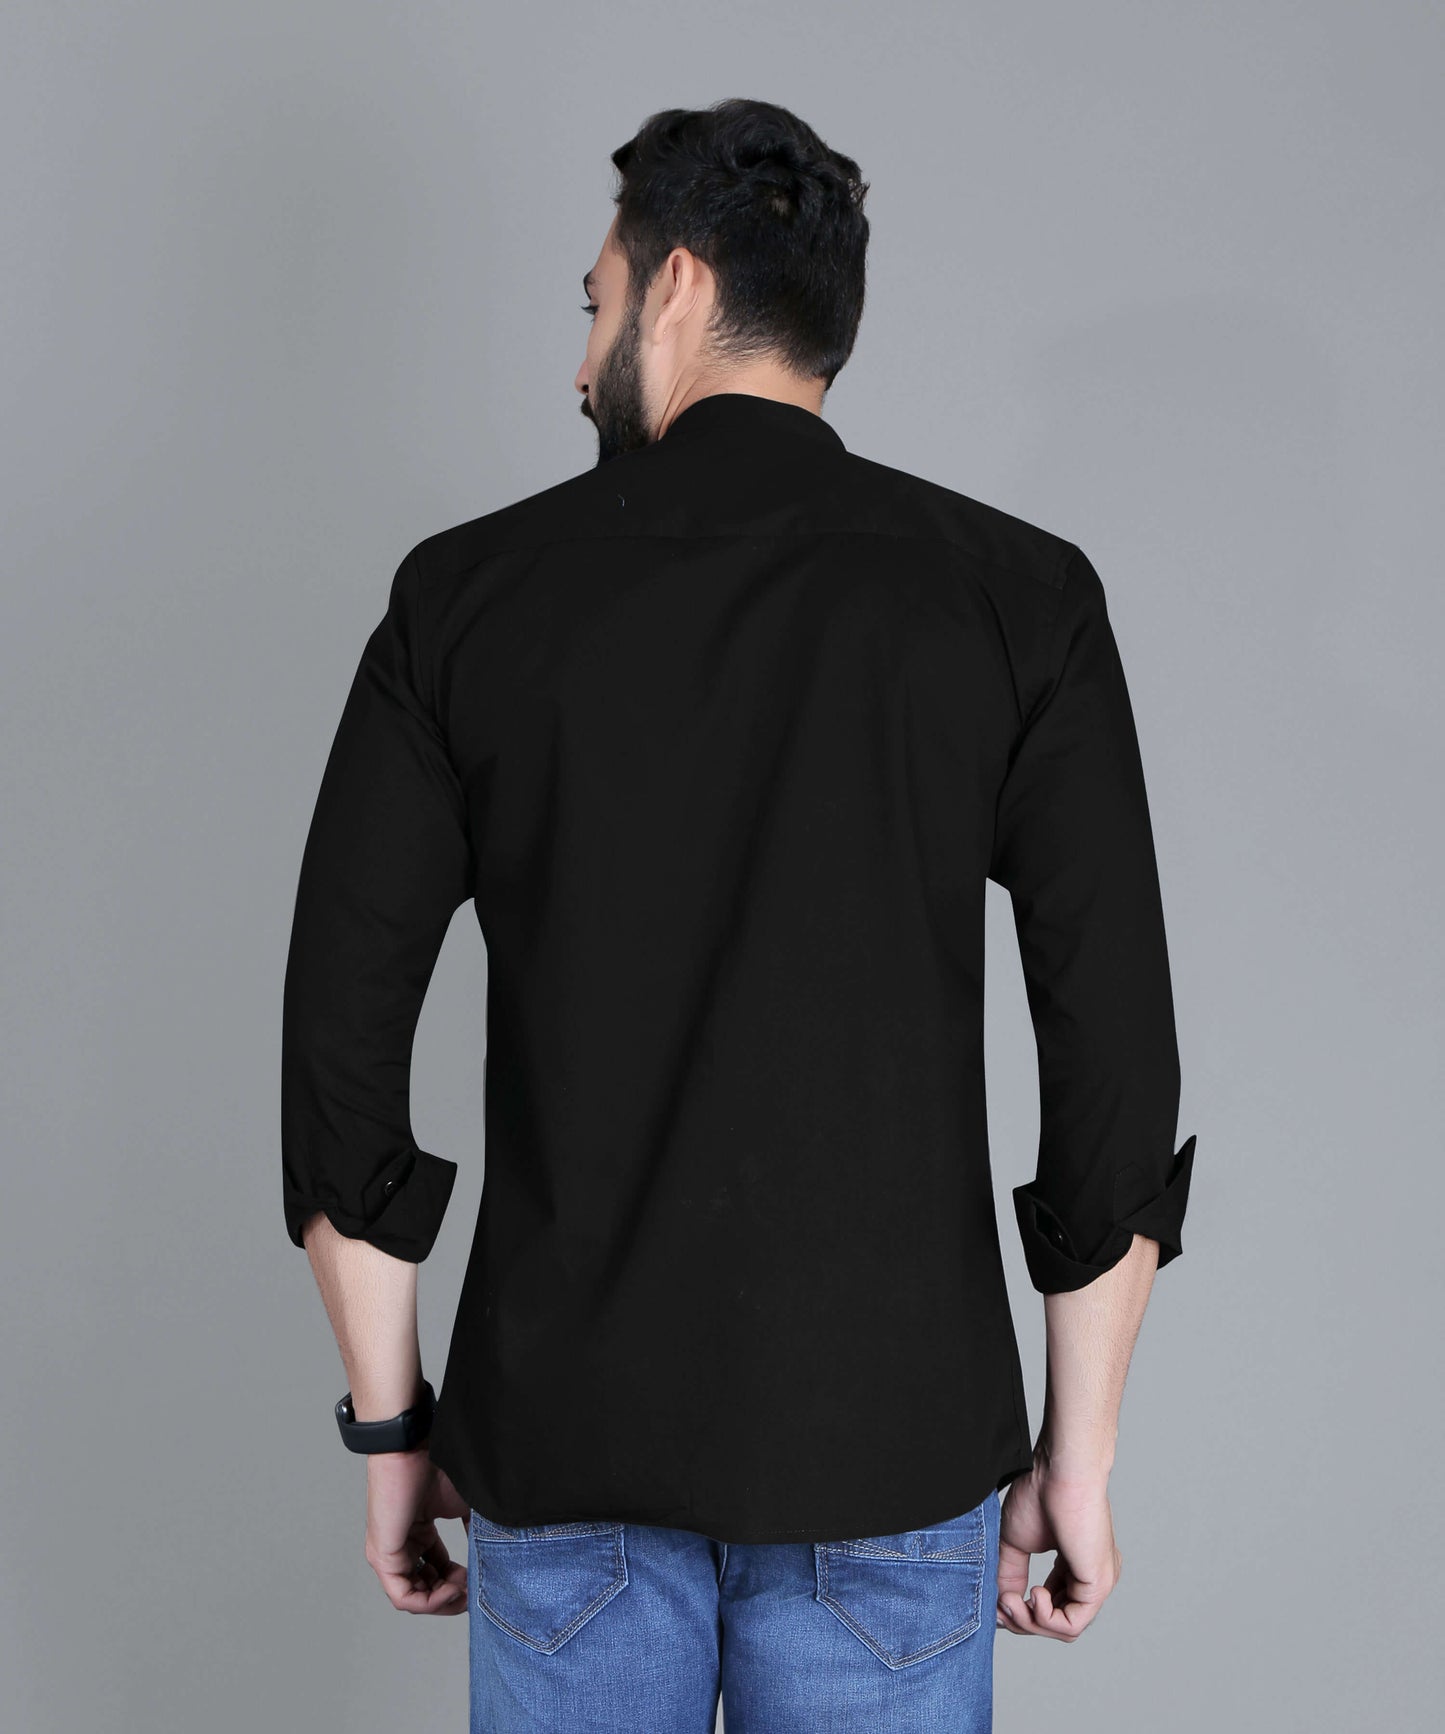 5thanfold Men's Casual Black Full Sleeve Pure Cotton Mandarin Collar Shirt (No Pocket)